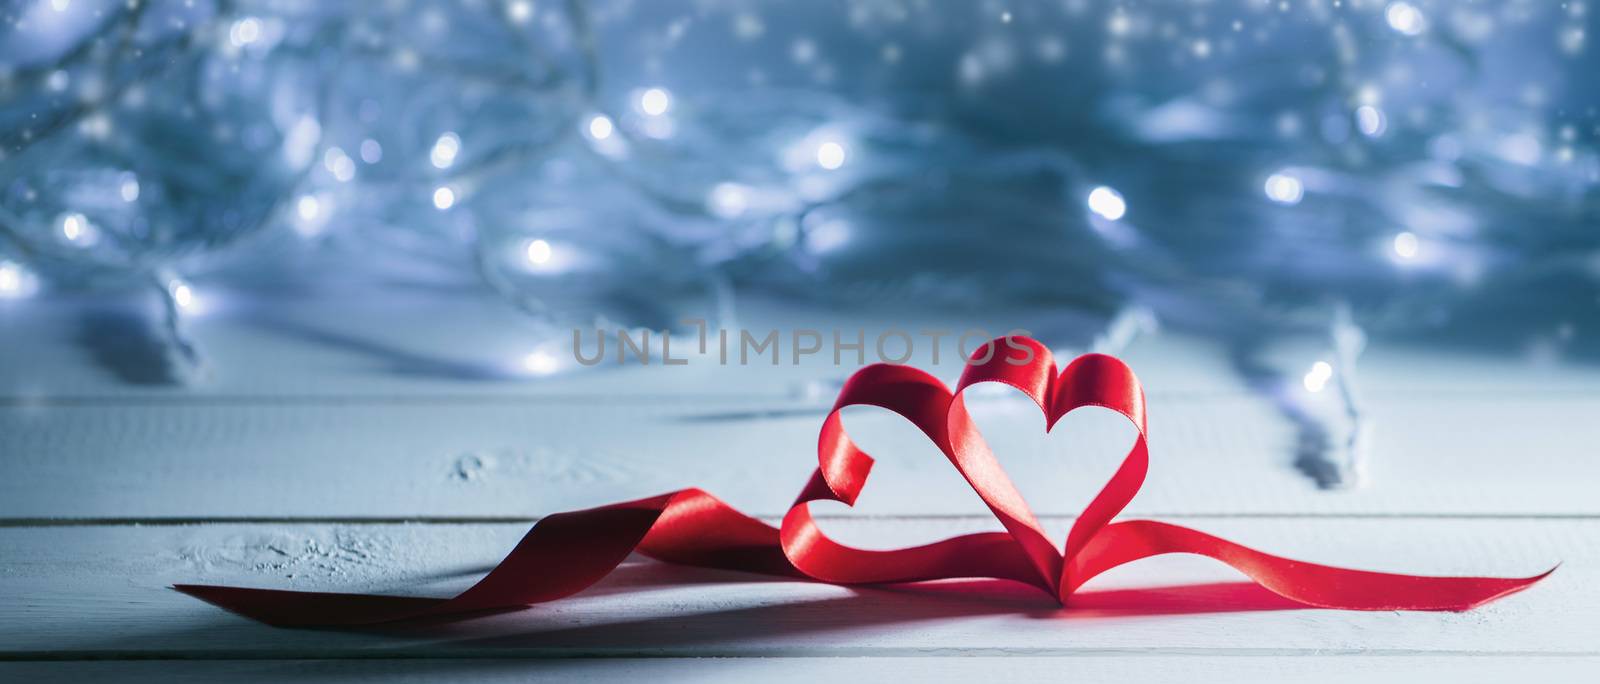 Valentines day ribbon hearts by Yellowj